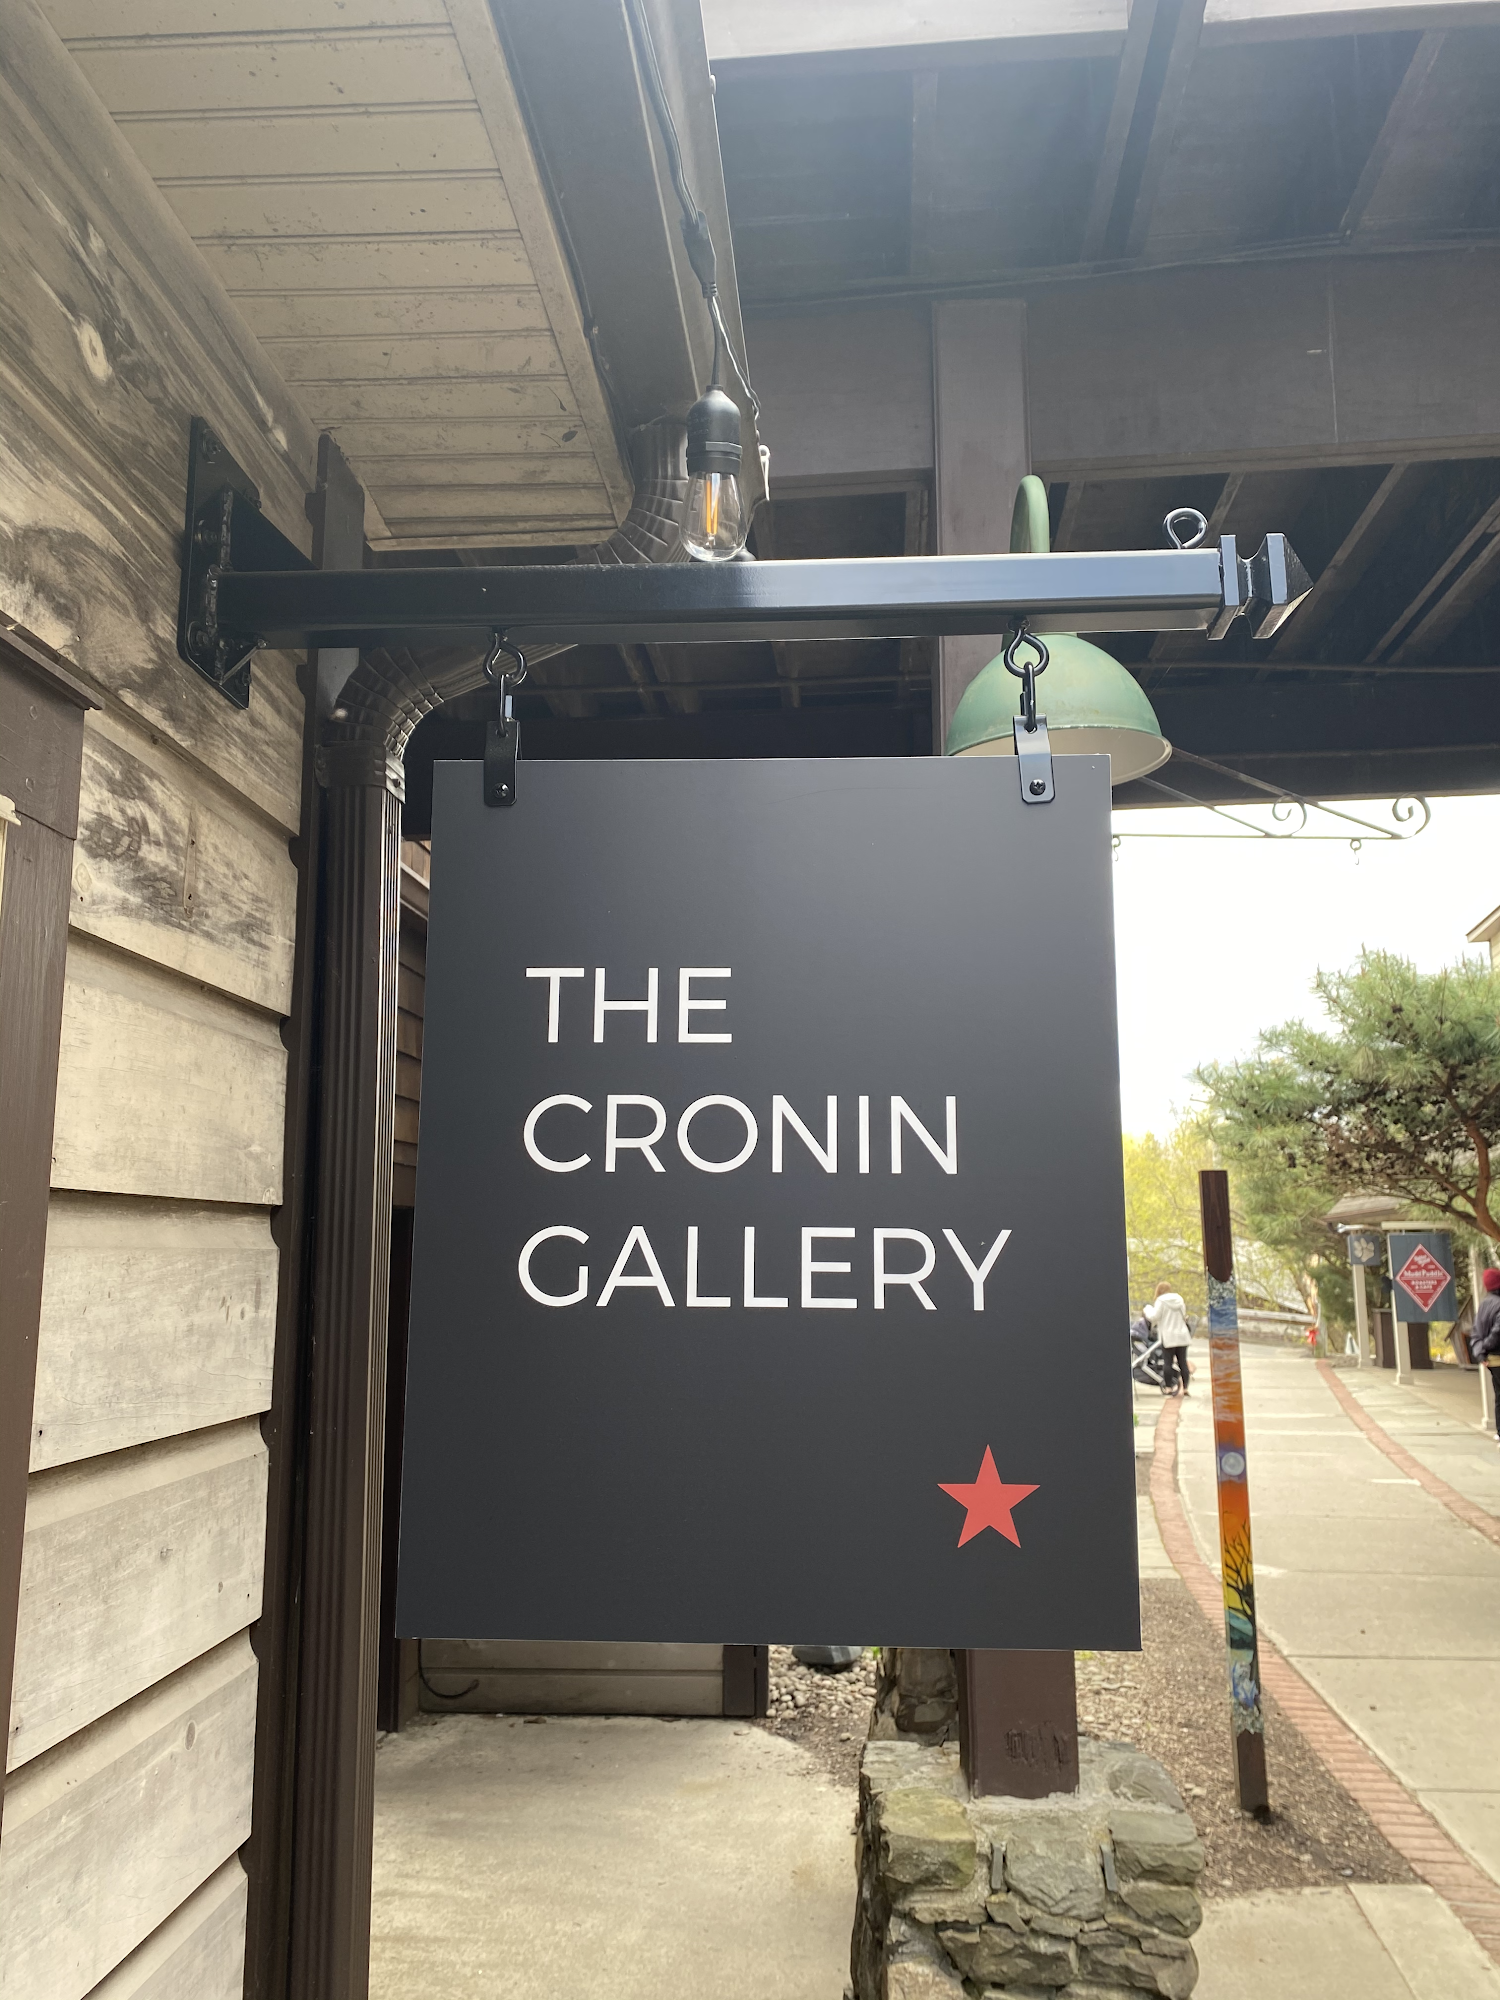 The Cronin Gallery